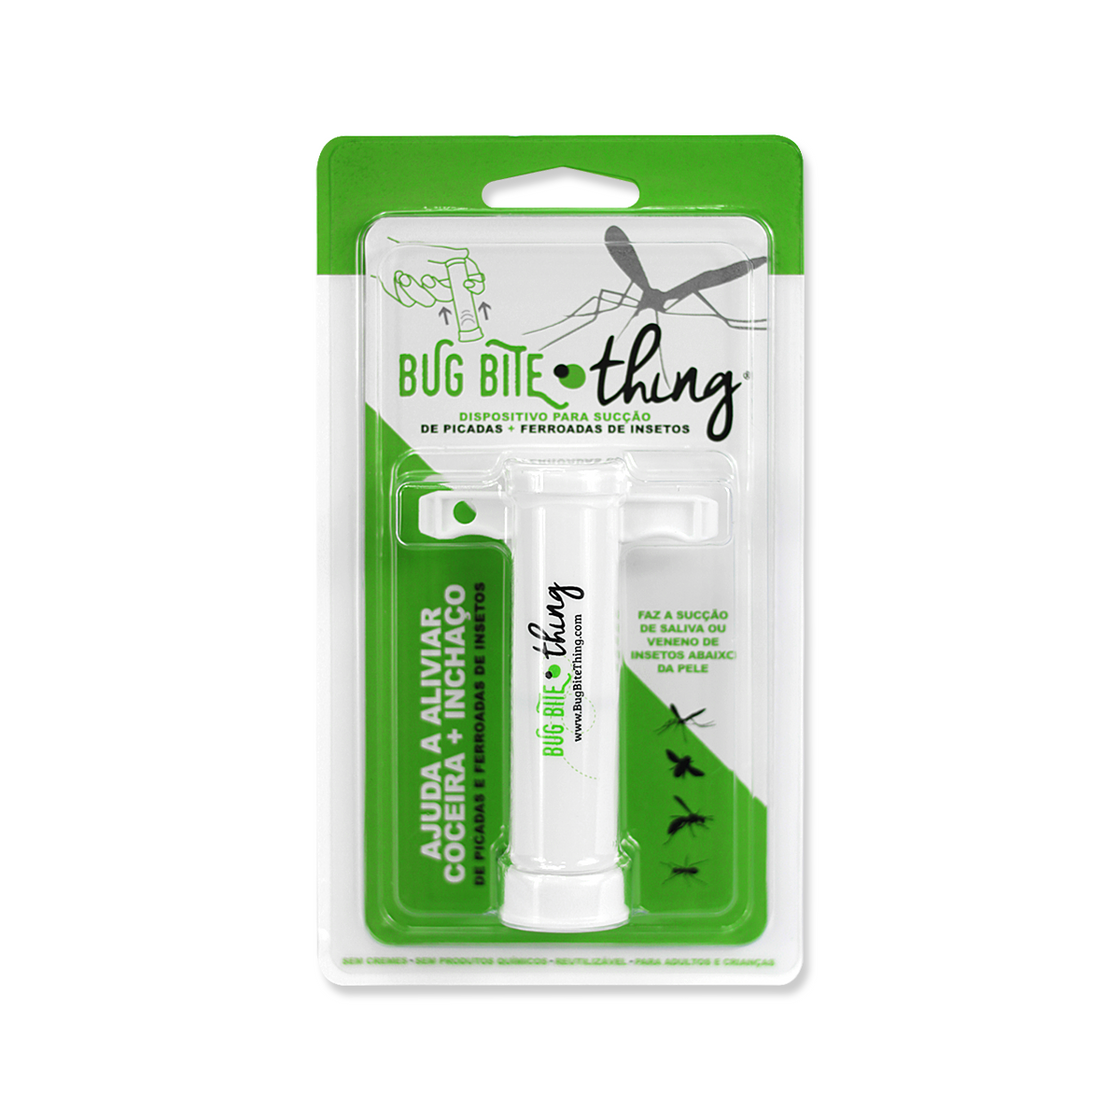 Bug Bite Thing - Dispositivo Reutilizável que Aliviar a Coceira e o Inchaço de Picadas e Ferroadas de Insetos